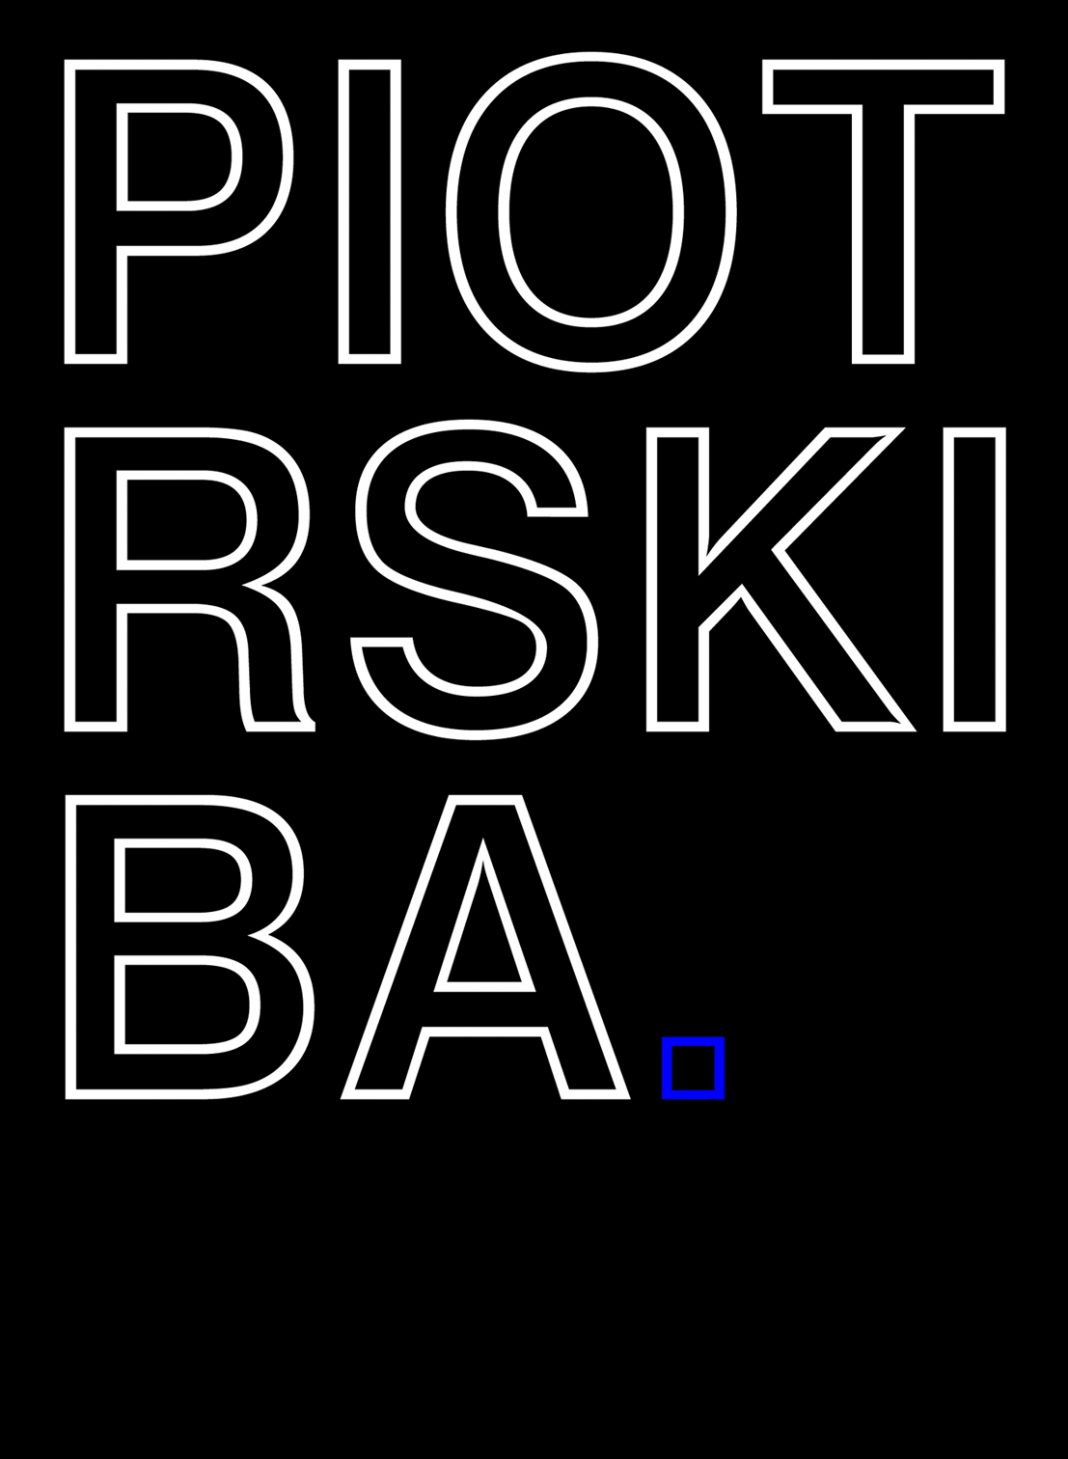 Piotr Skibahttps://www.exibart.com/repository/media/eventi/2017/02/piotr-skiba-1068x1459.jpg